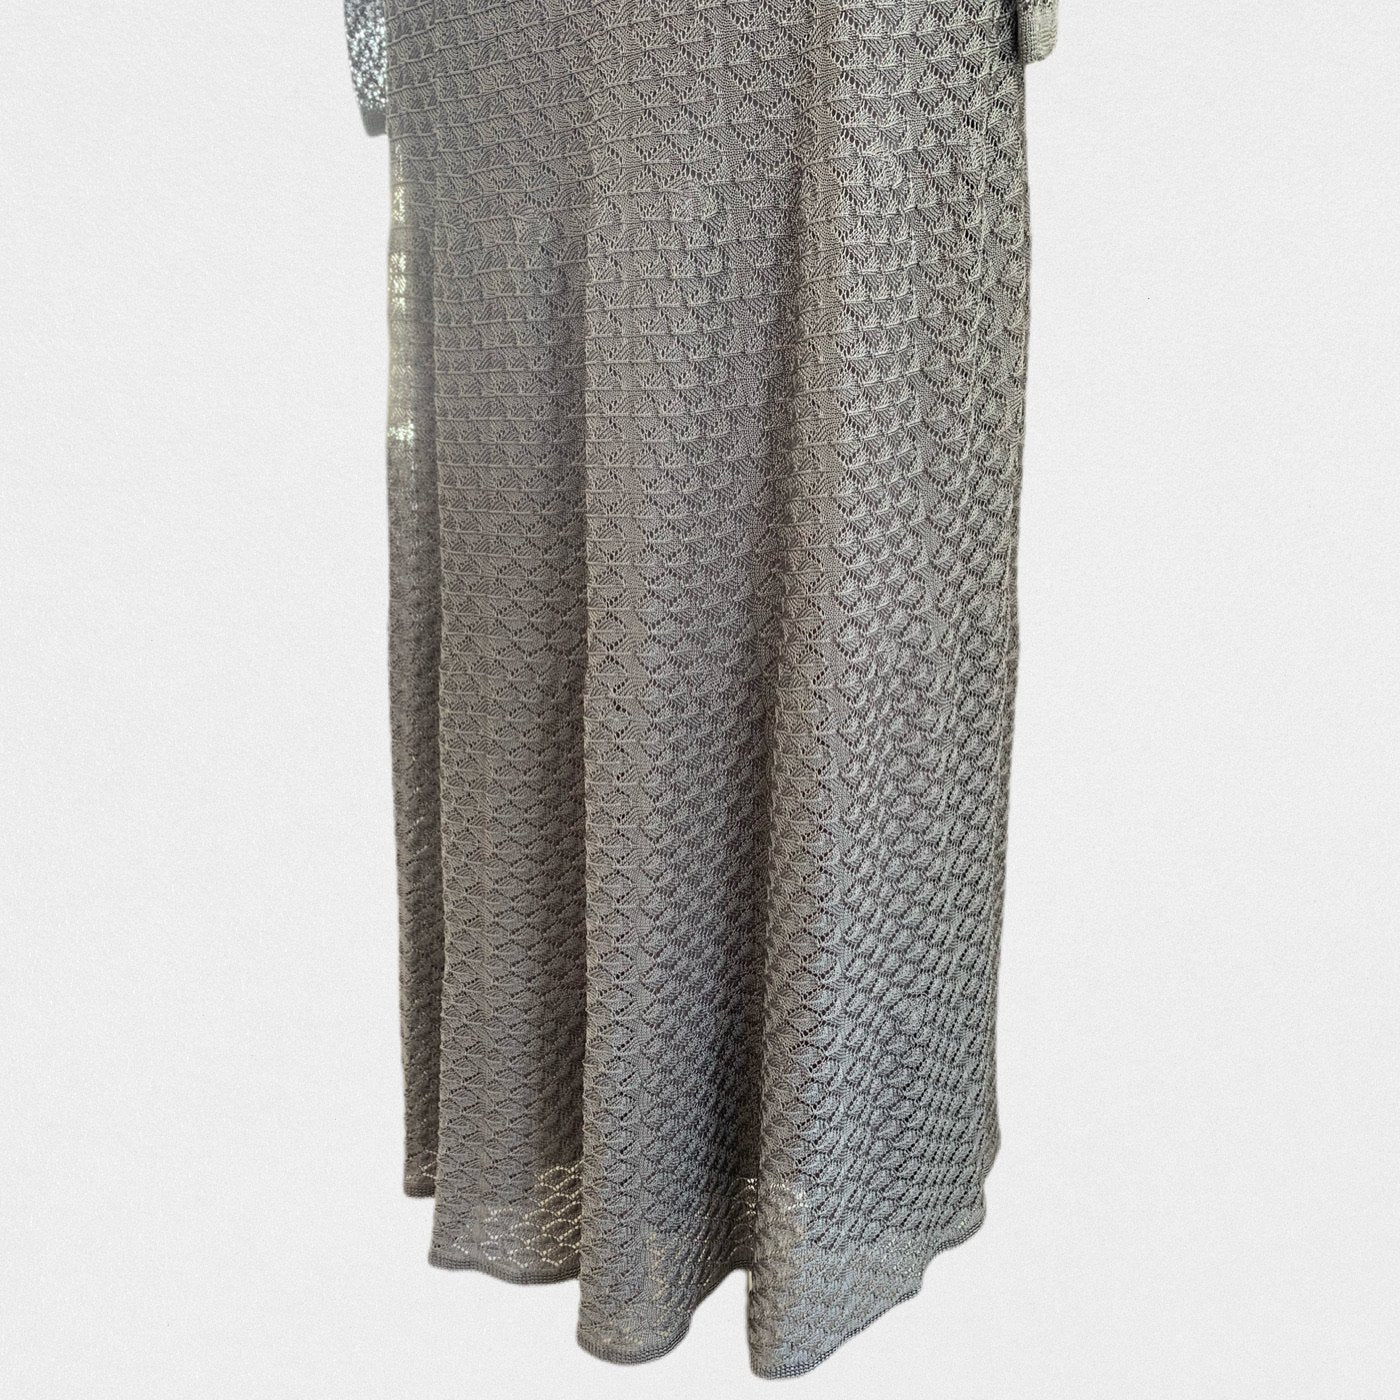 Lysis vintage Christian Dior long knitted dress by Maria Grazia Chiuri - M - 2010s